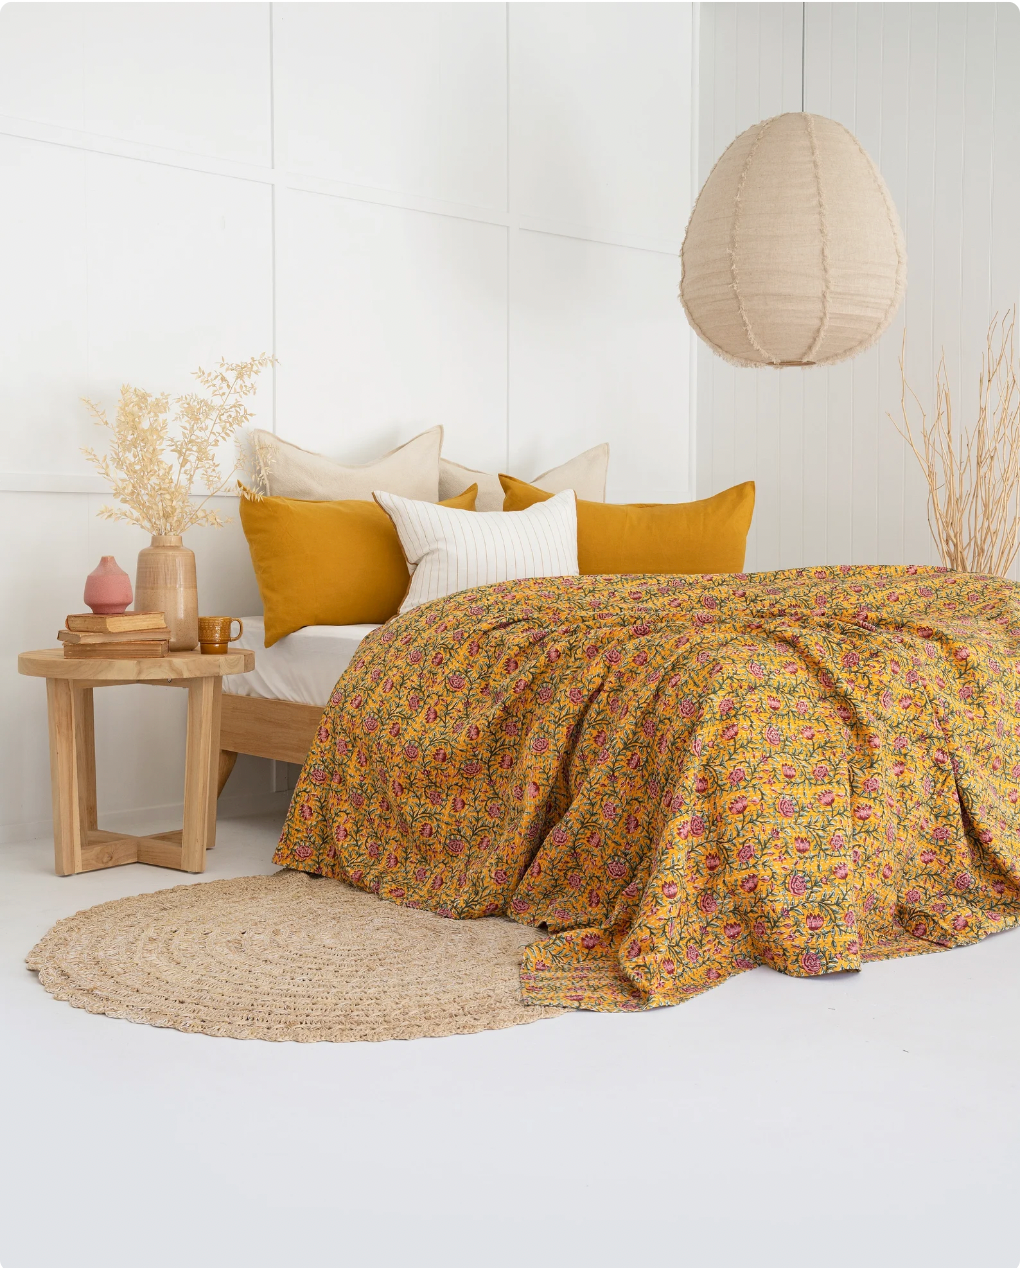 Golden Sunrise Block Print Bedspread with Kantha Stitch